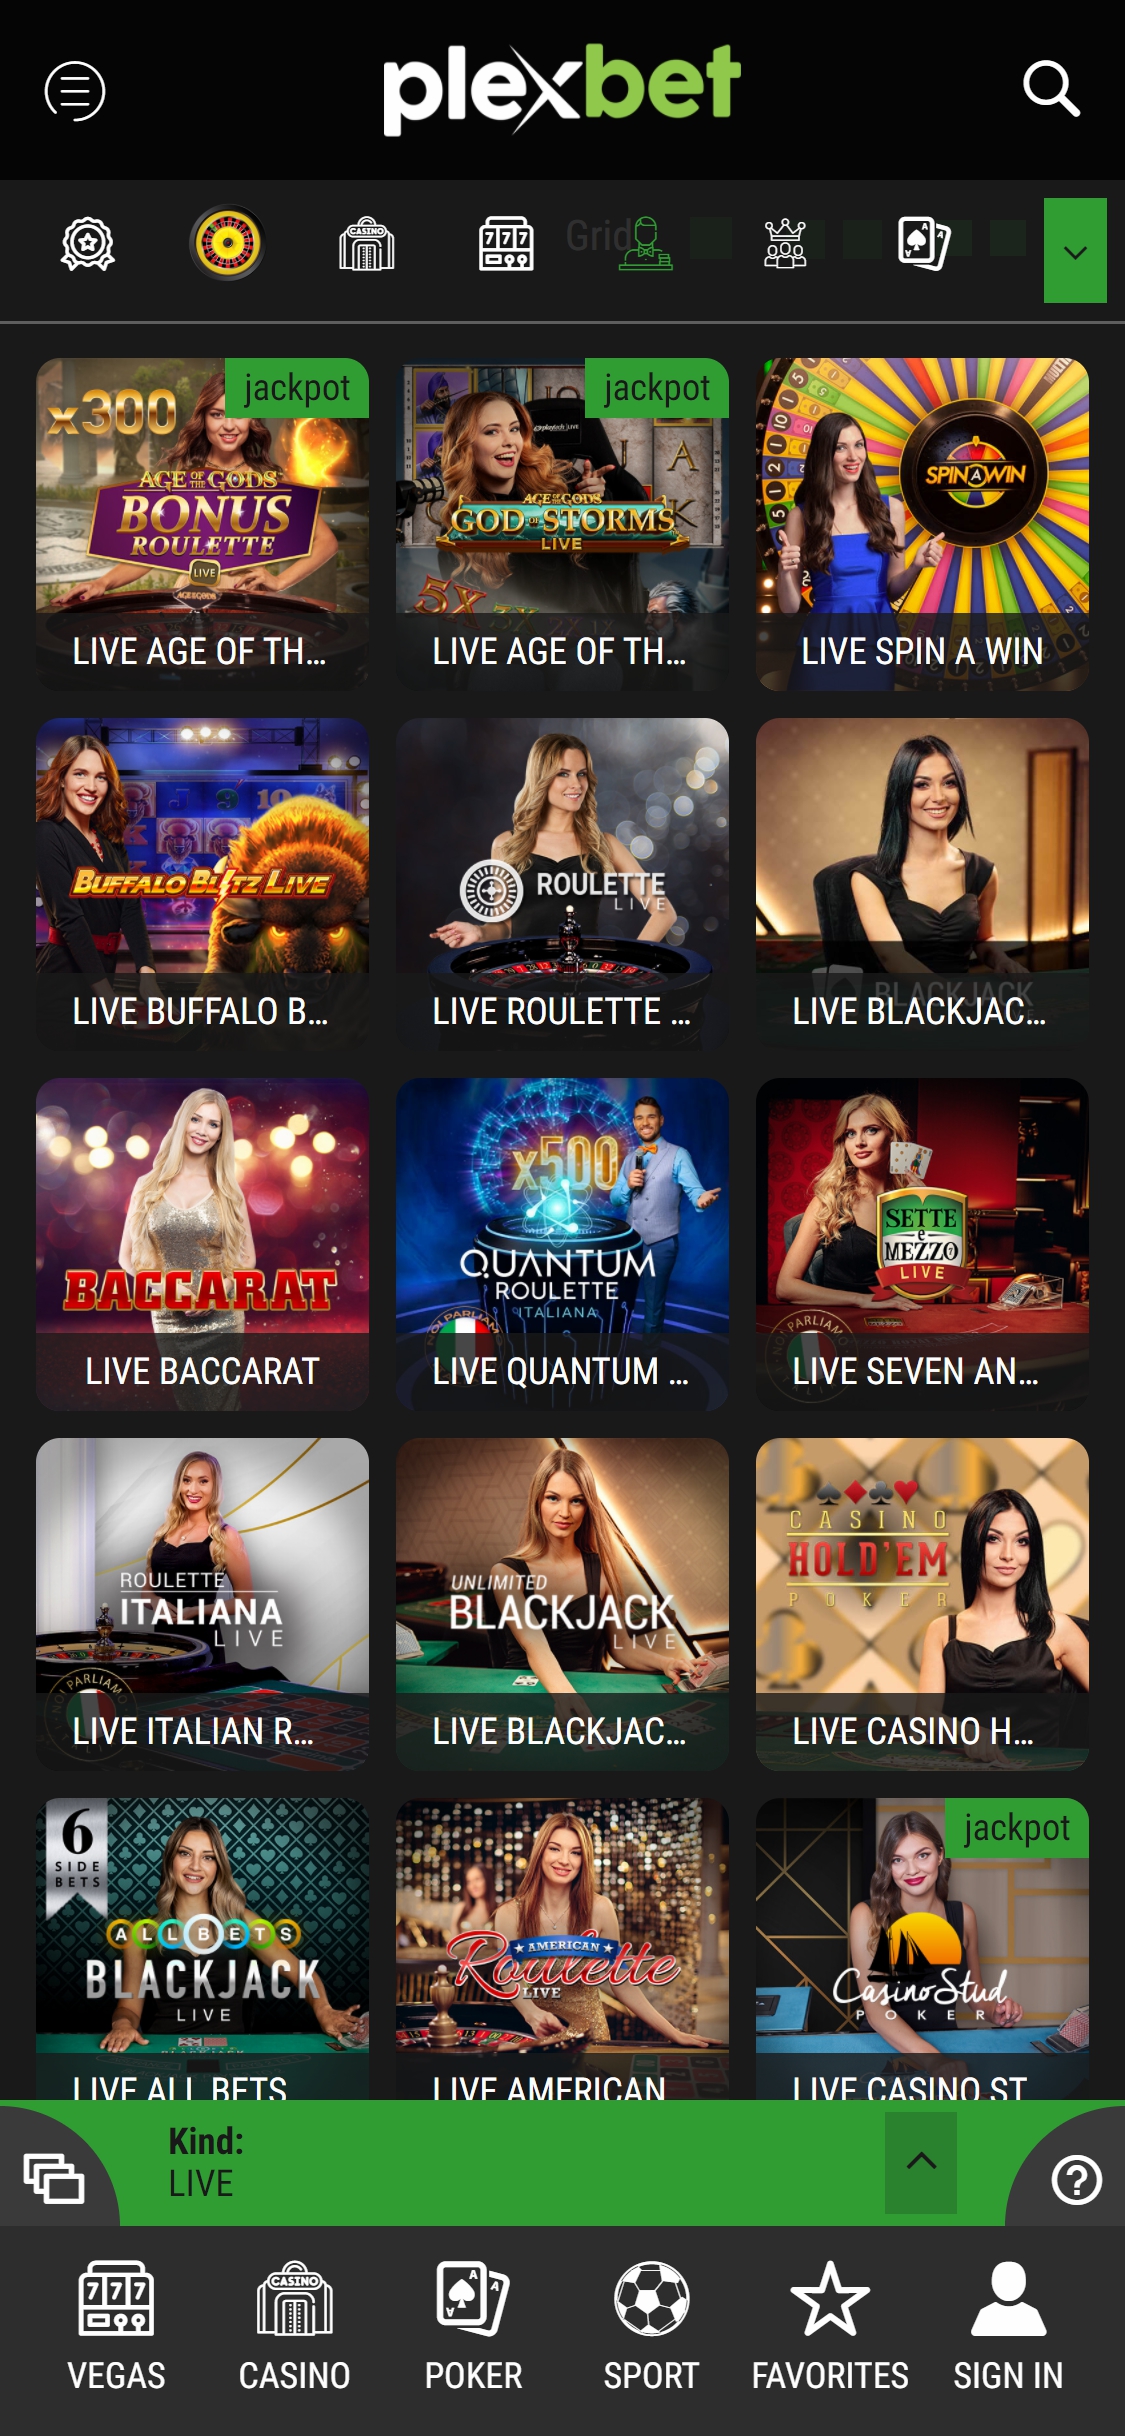 Plex Bet Casino Mobile Live Dealer Games Review